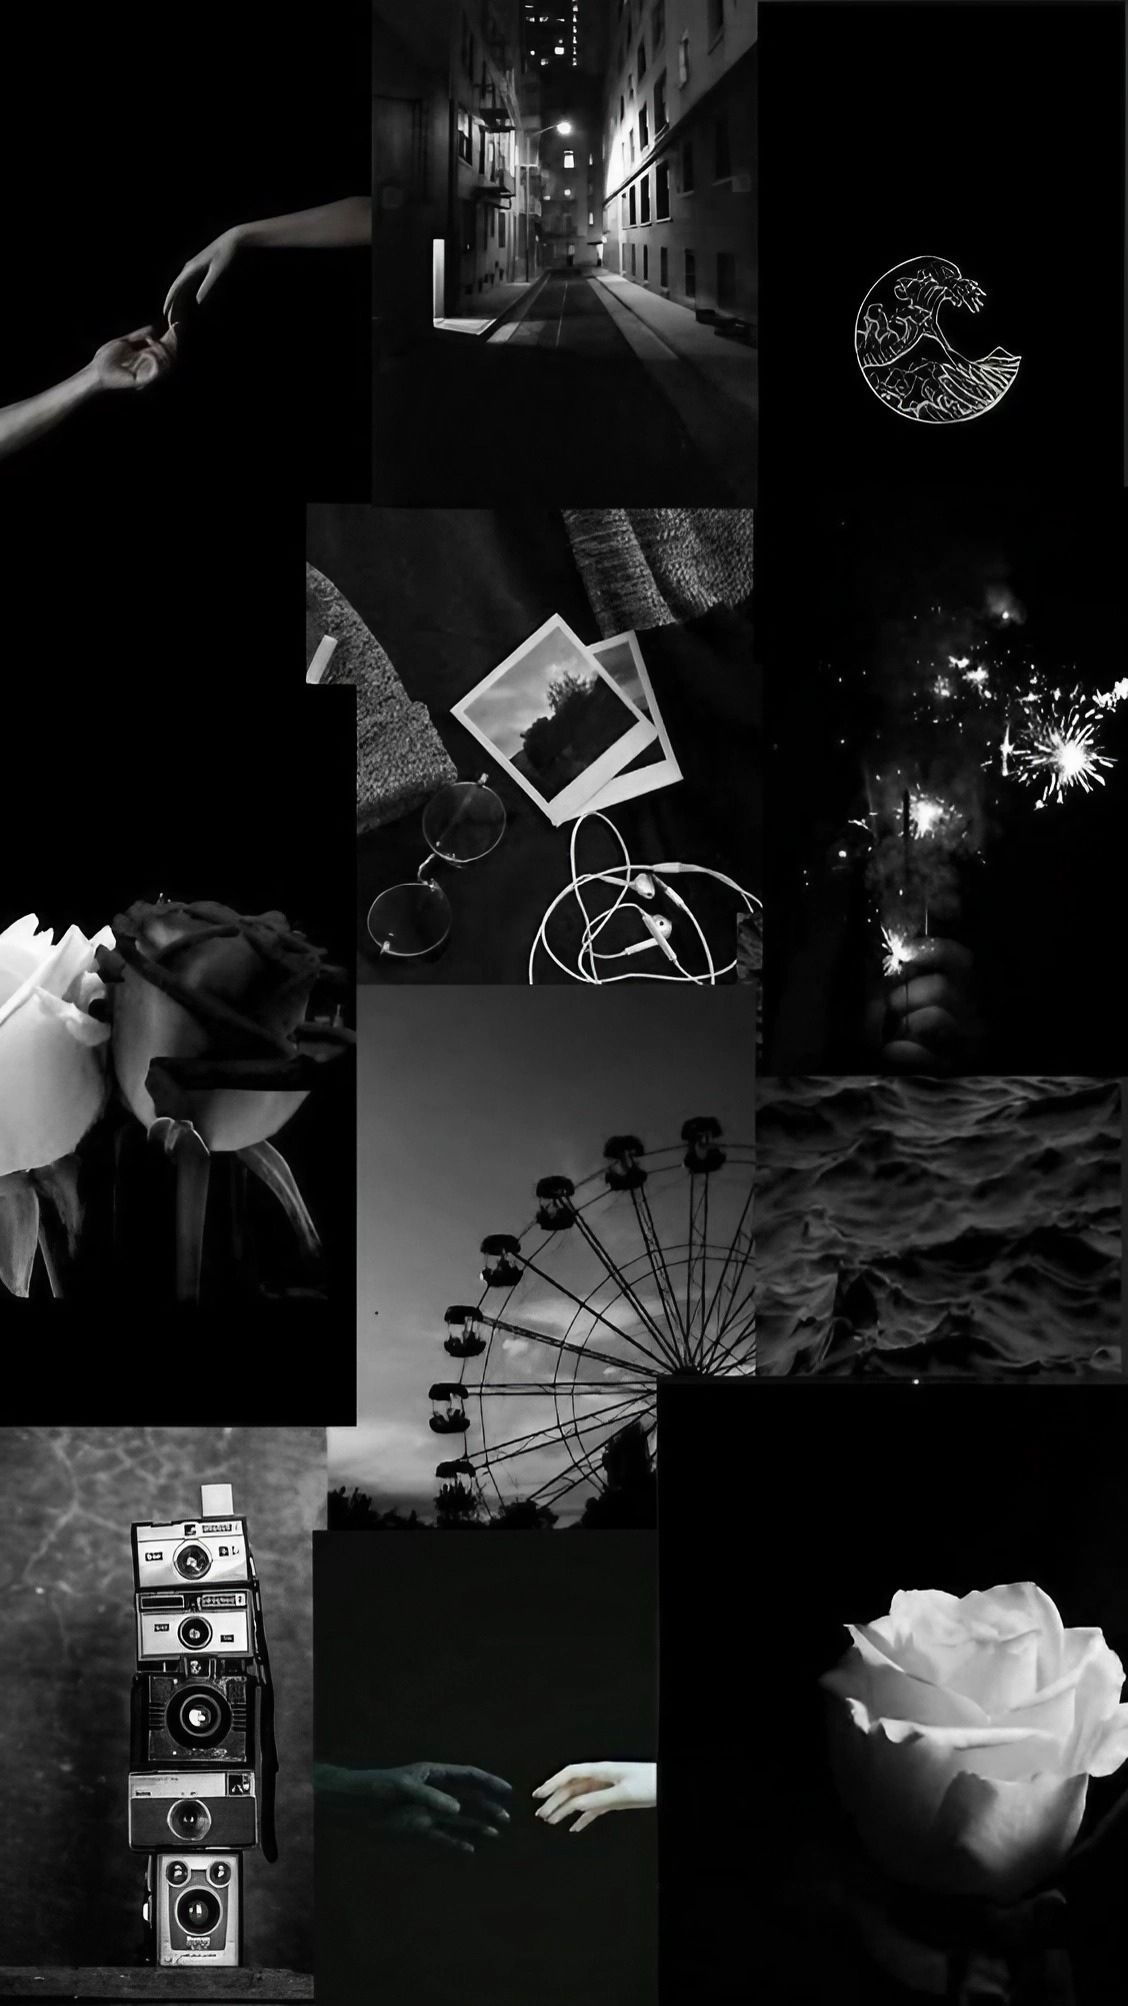 Black and white aesthetic wallpaper, photography, polaroid, moon, ferris wheel, rose, camera, hand, street, night, dark, stars, for phone and desktop backgrounds. - Black and white, black